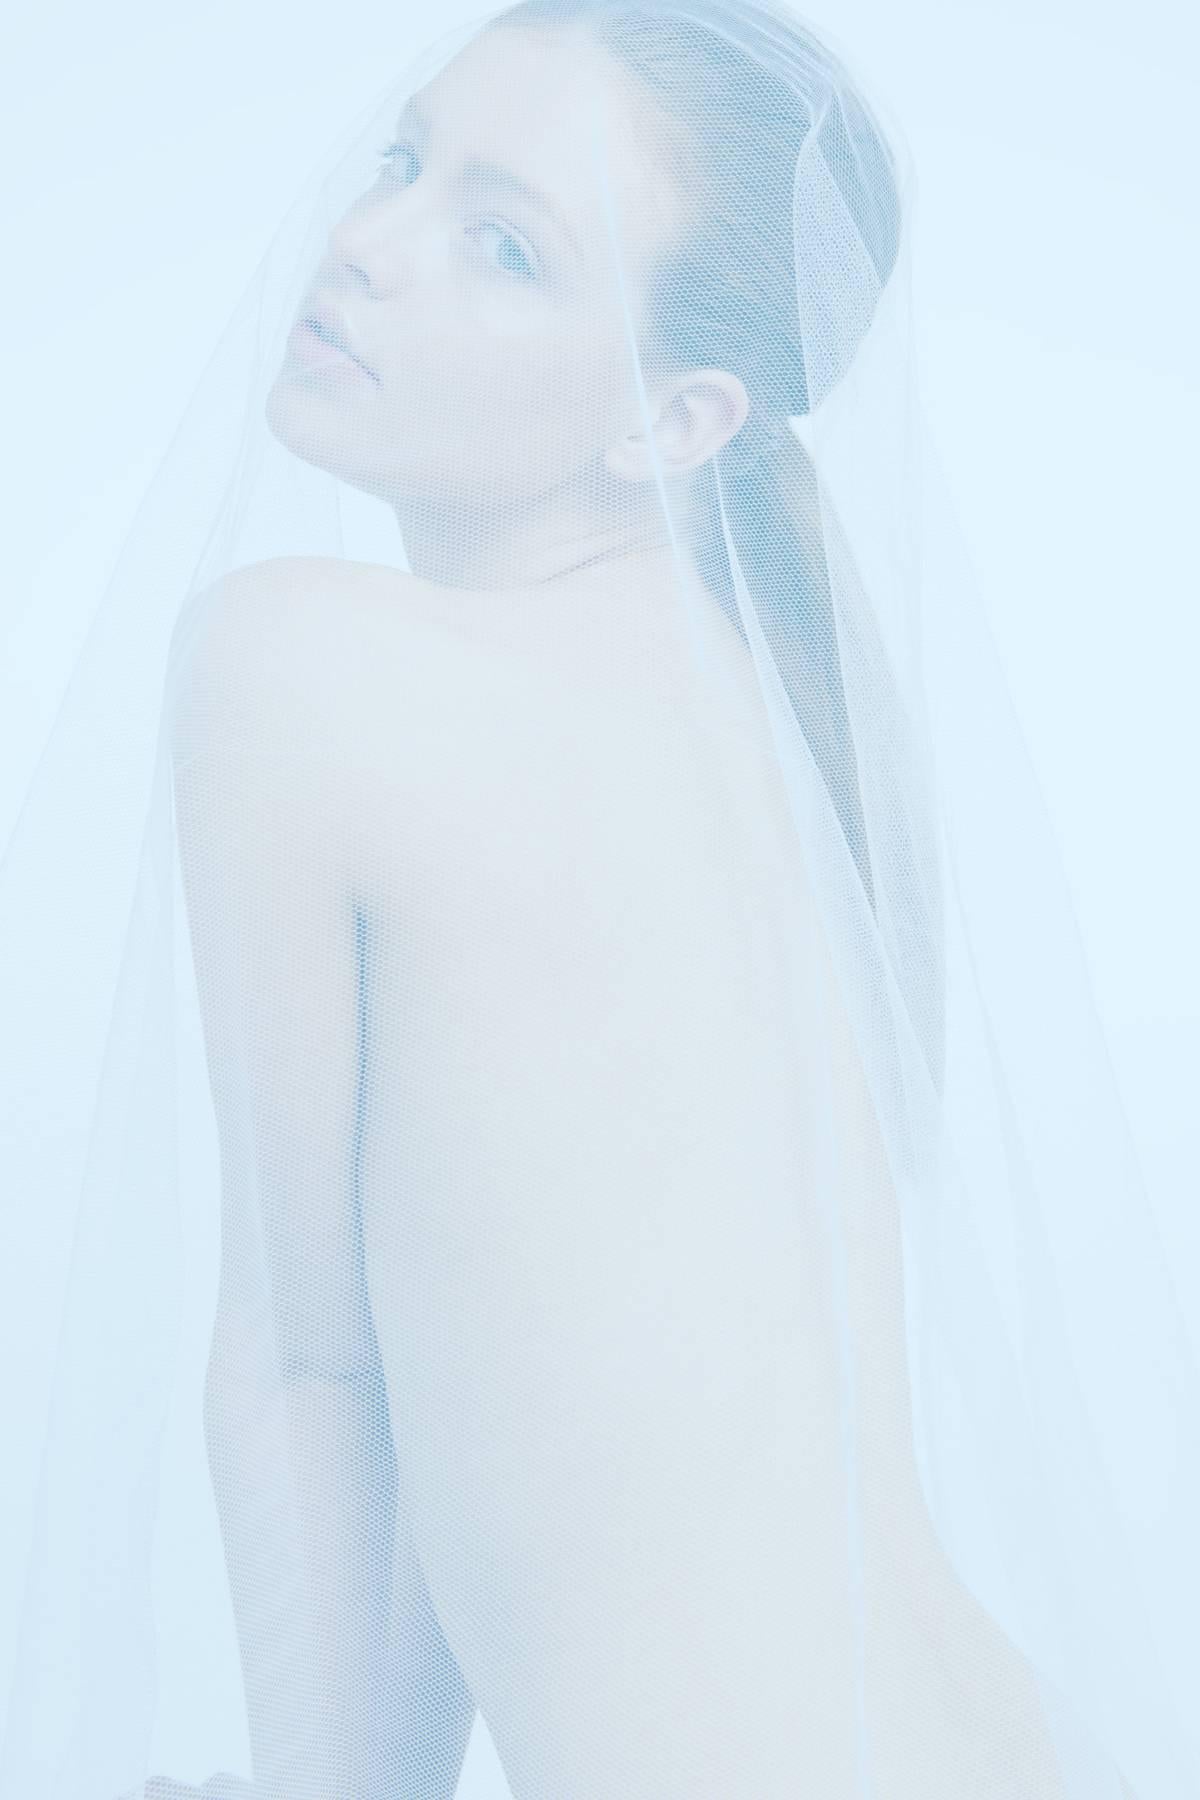 Jessica van Haselen Nude Photograph - Spirit II - Framed Fine Art Limited Edition of 149